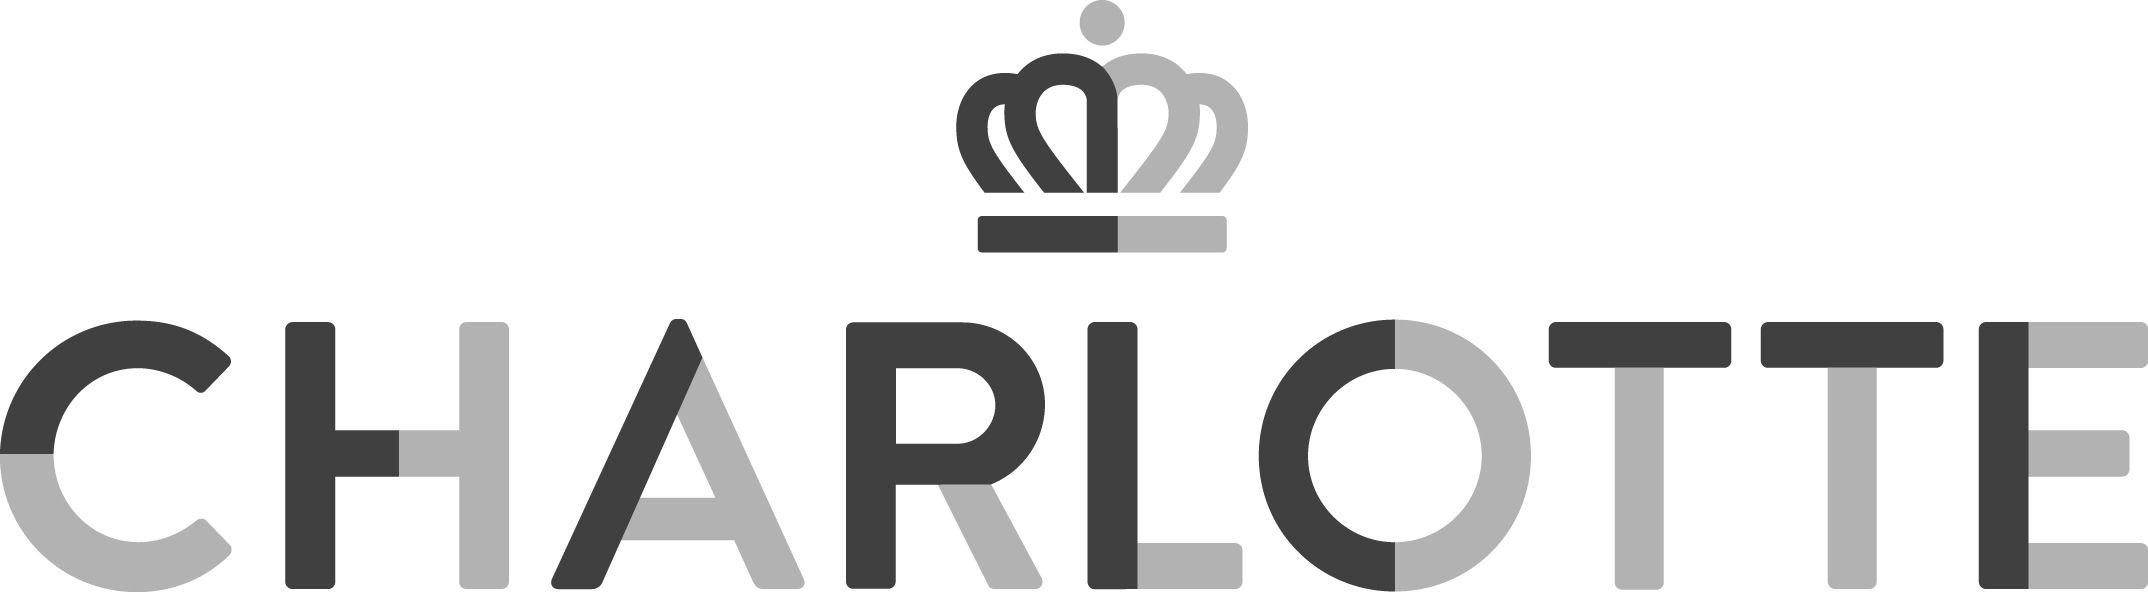 Charlotte Logo - Charlotte, NC CVB Sales Staff